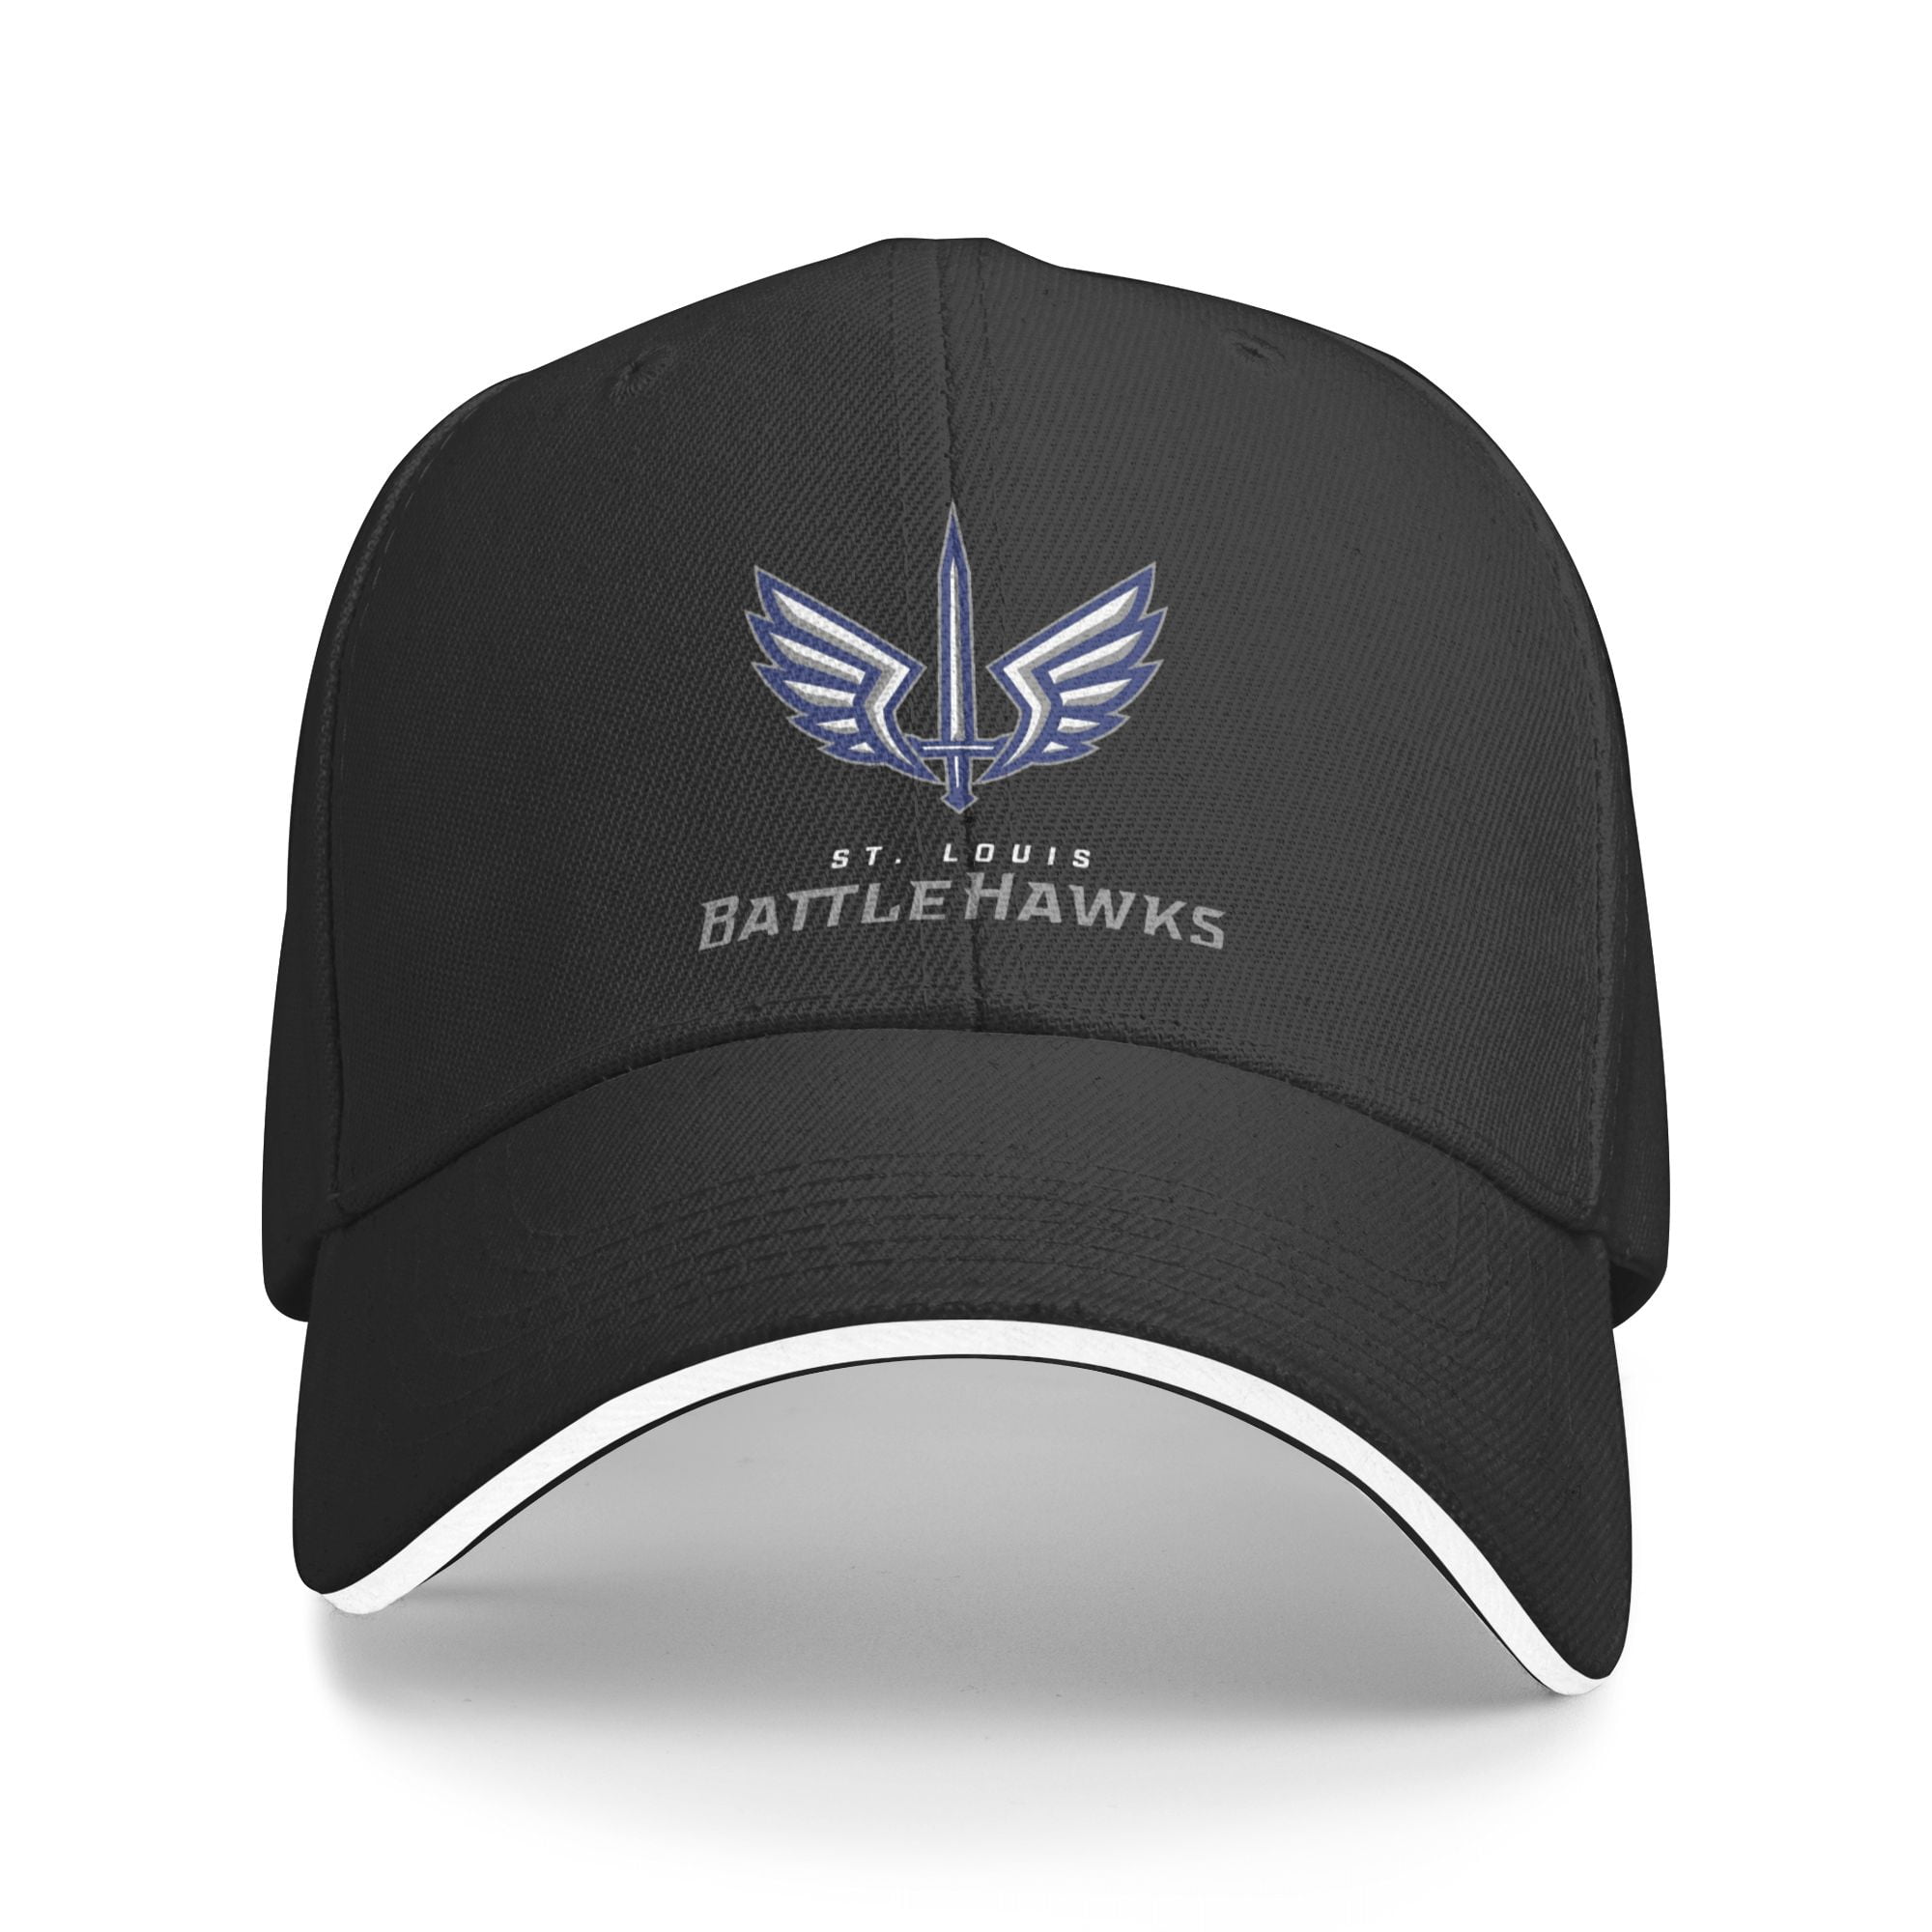 St. Louis BattleHawks casquette Navy Blue Adjustable Snapback Hat